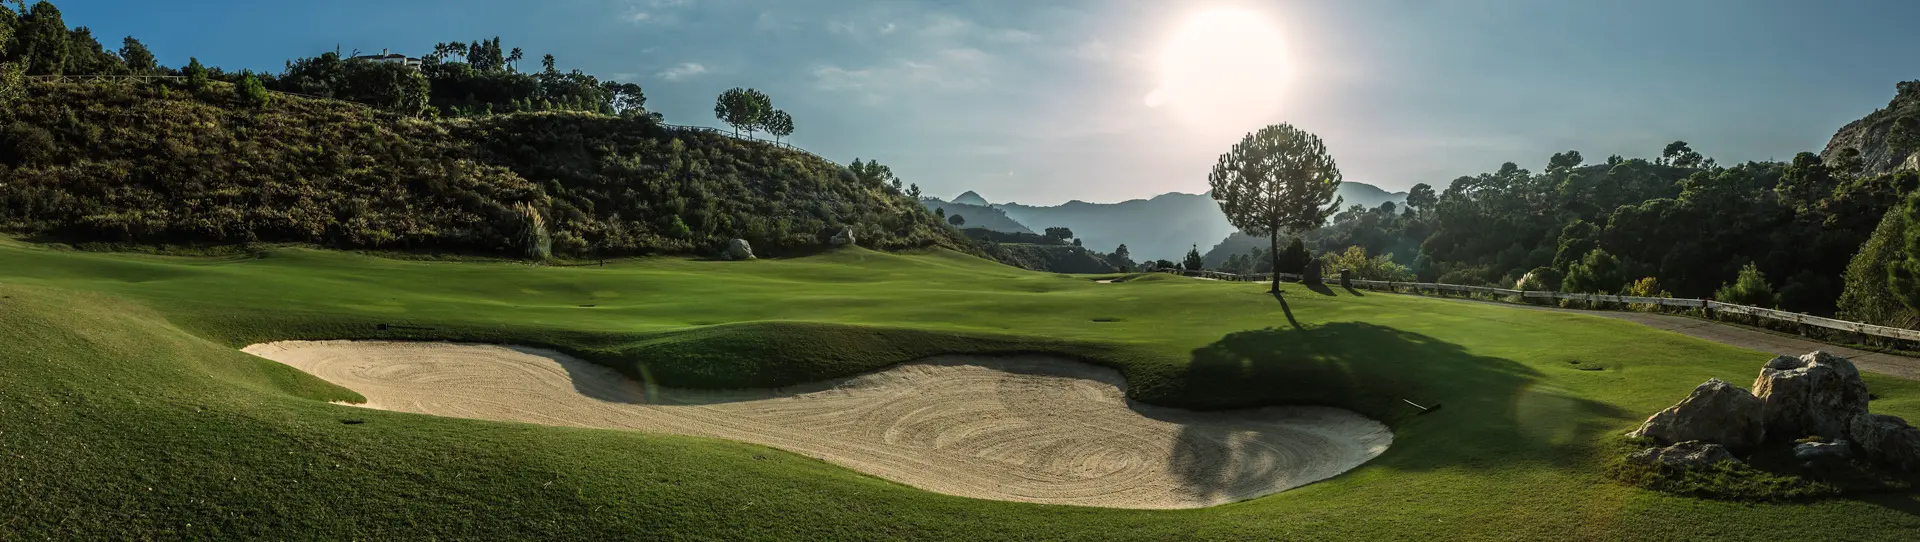 Spain golf courses - La Zagaleta New Course - Photo 3